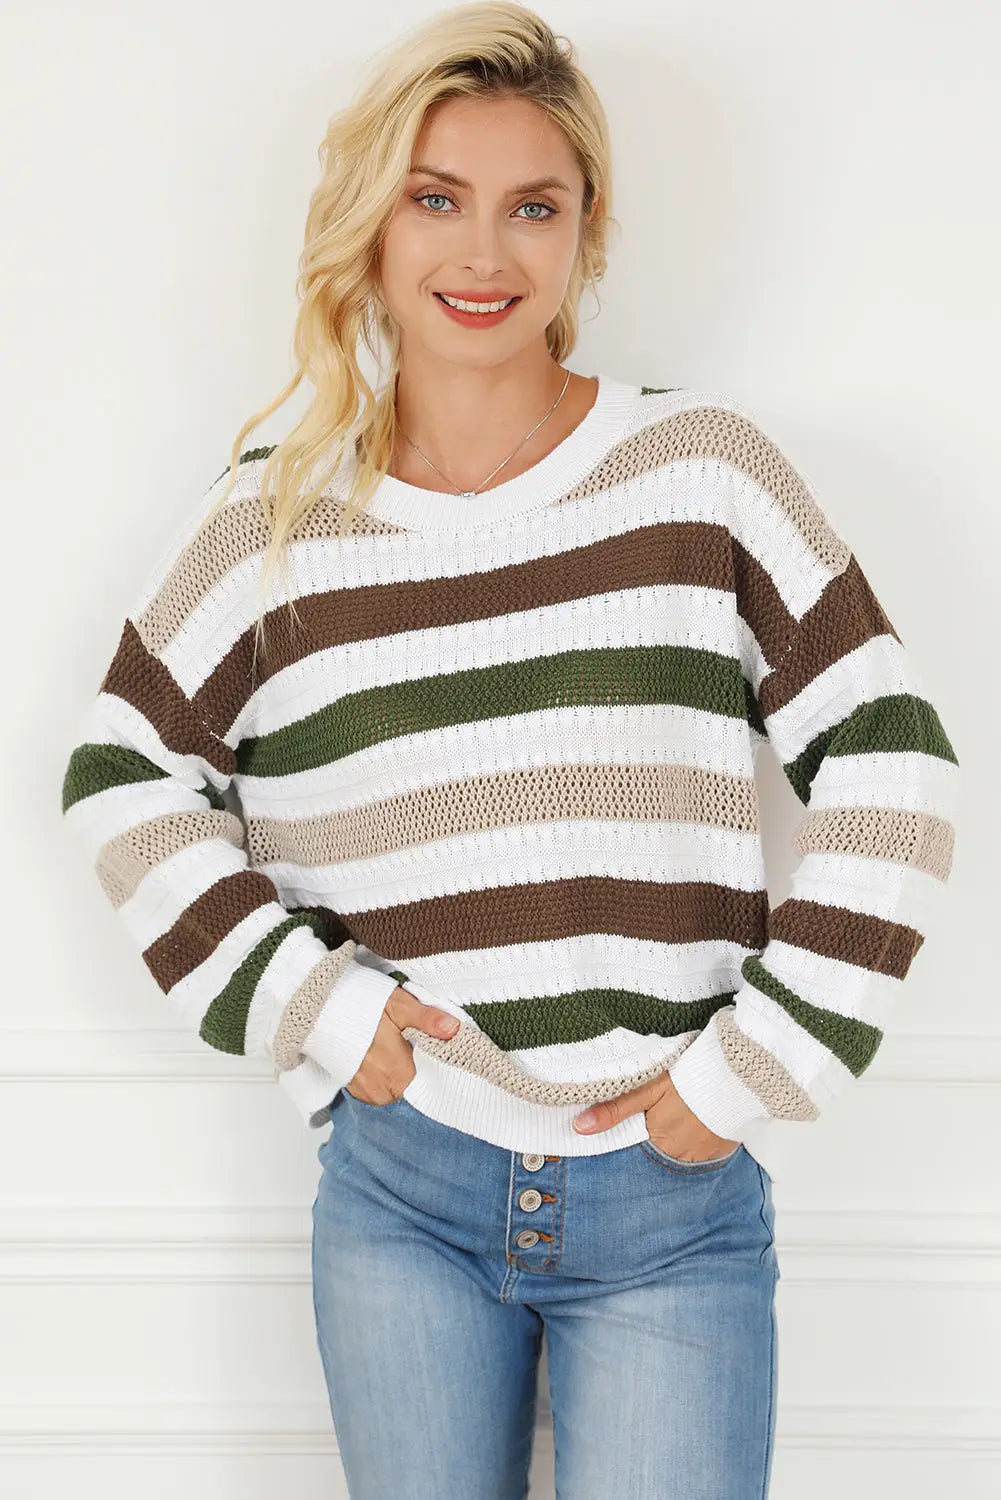 Stripe crochet hollow out knit sweater - sweaters & cardigans